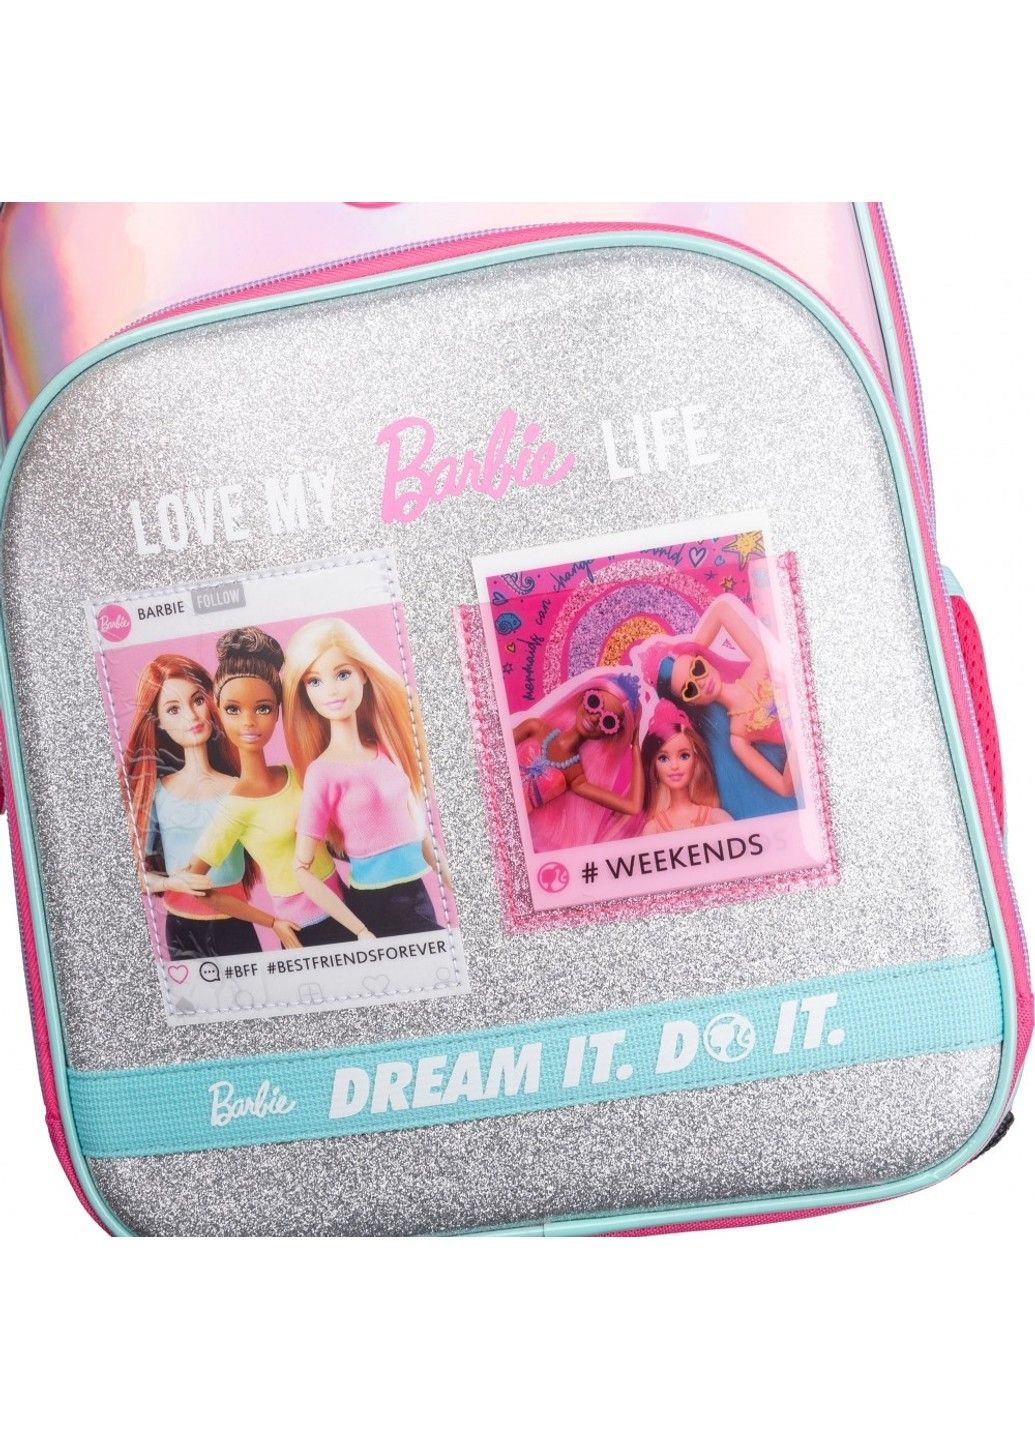 Рюкзак школьный для младших классов S-78 Barbie Yes (278404450)